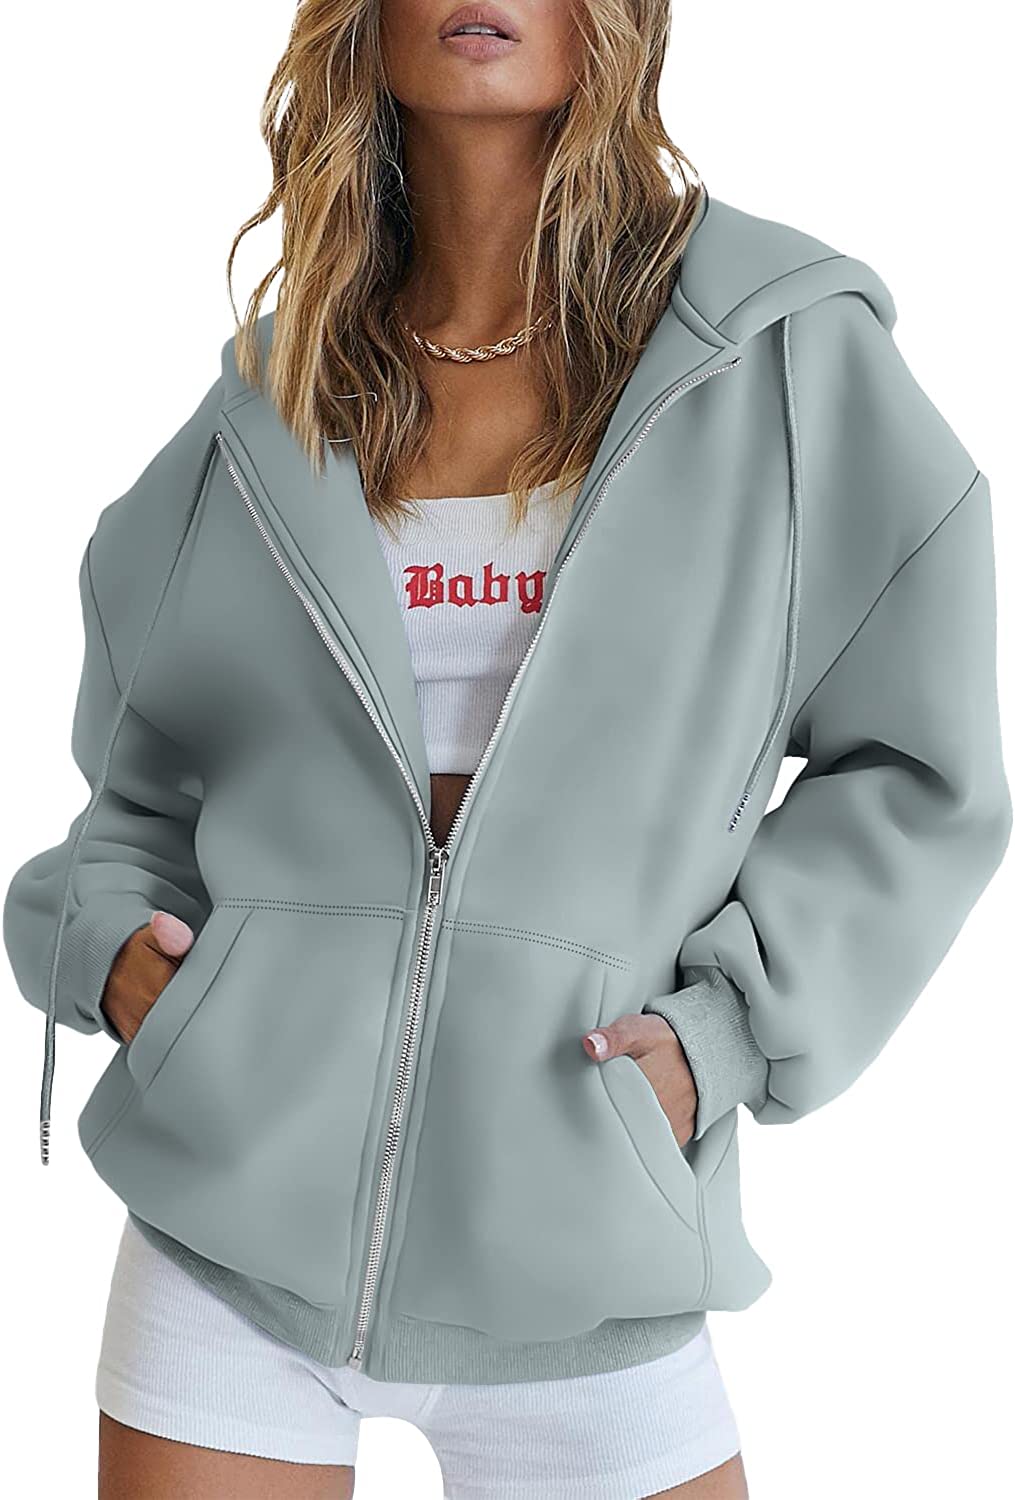 Lady Cute Hoodie Teen Girl Fall Jacket Oversized Sweatshirt Casual